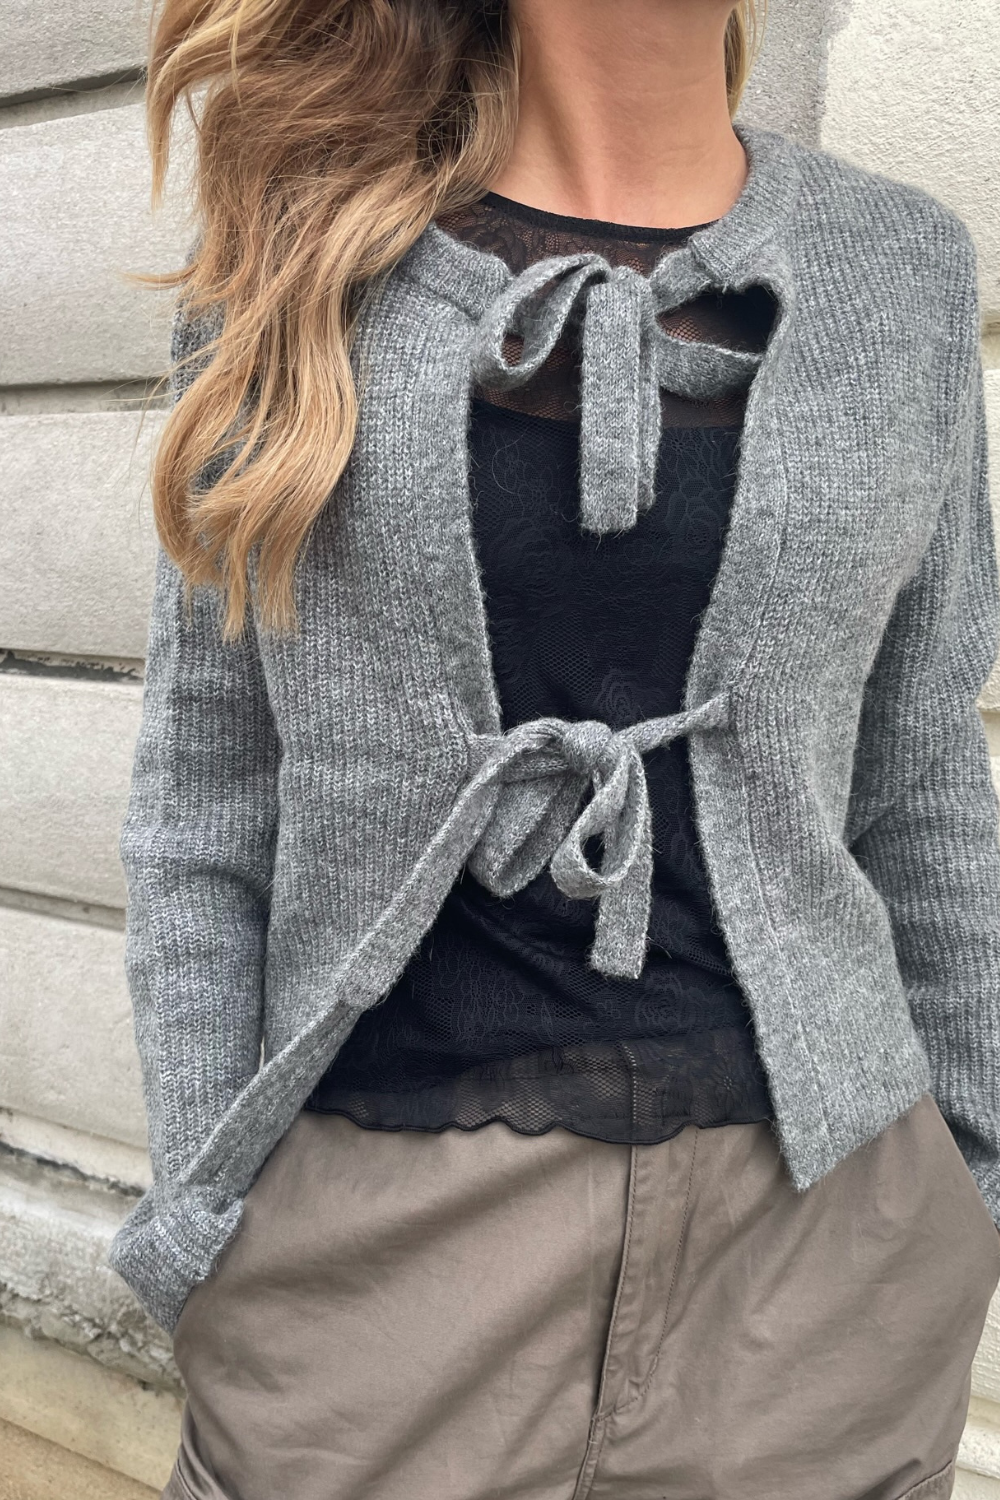 Objparvi Knit Cardigan 130 - Medium Grey Melange - Object